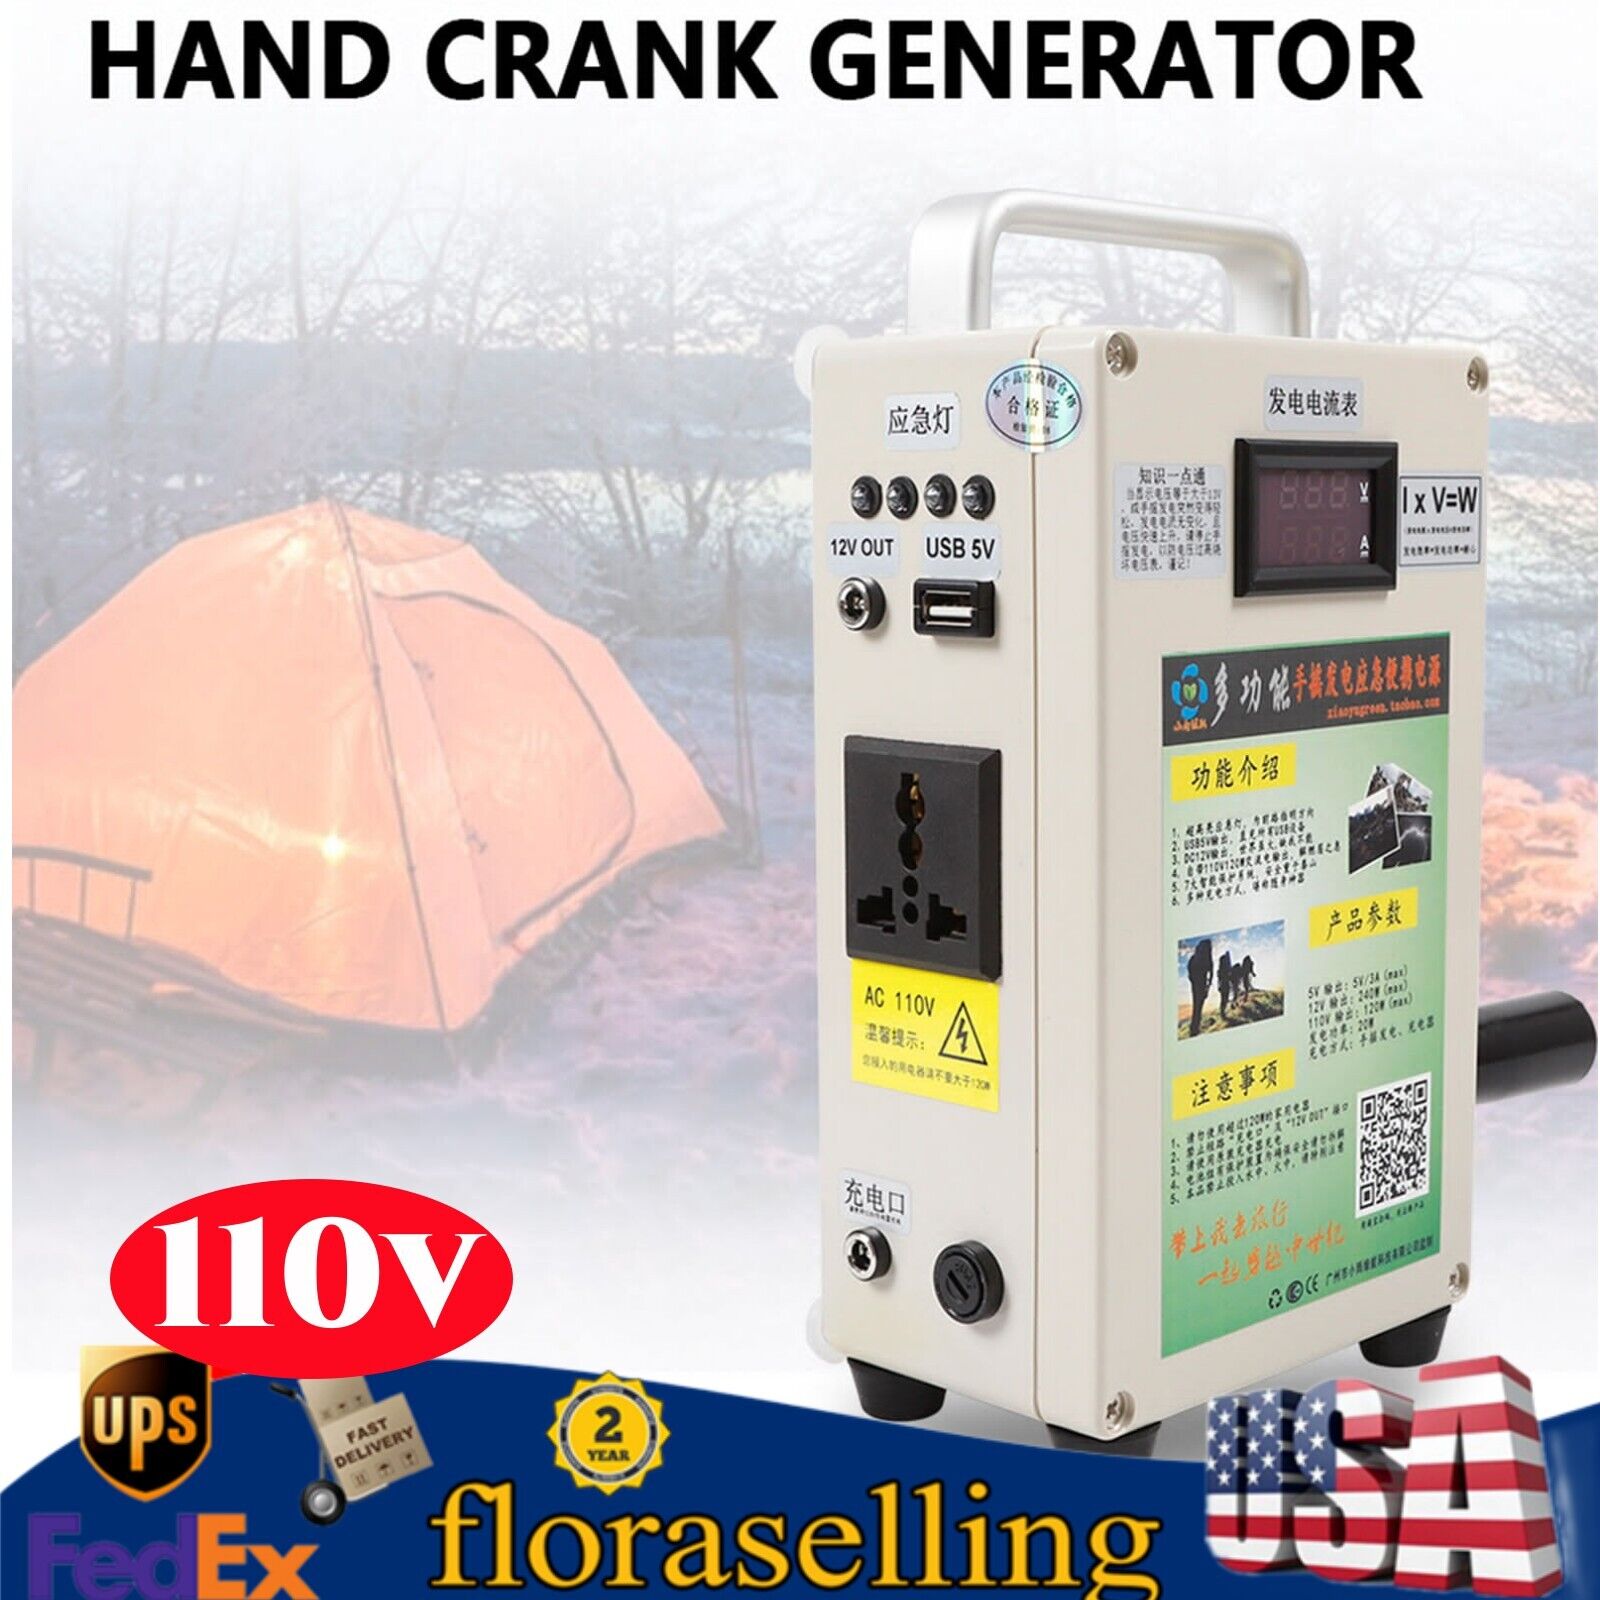 Portable Hand Crank Generator Camping Emergency Power Supply USB Phone Charging